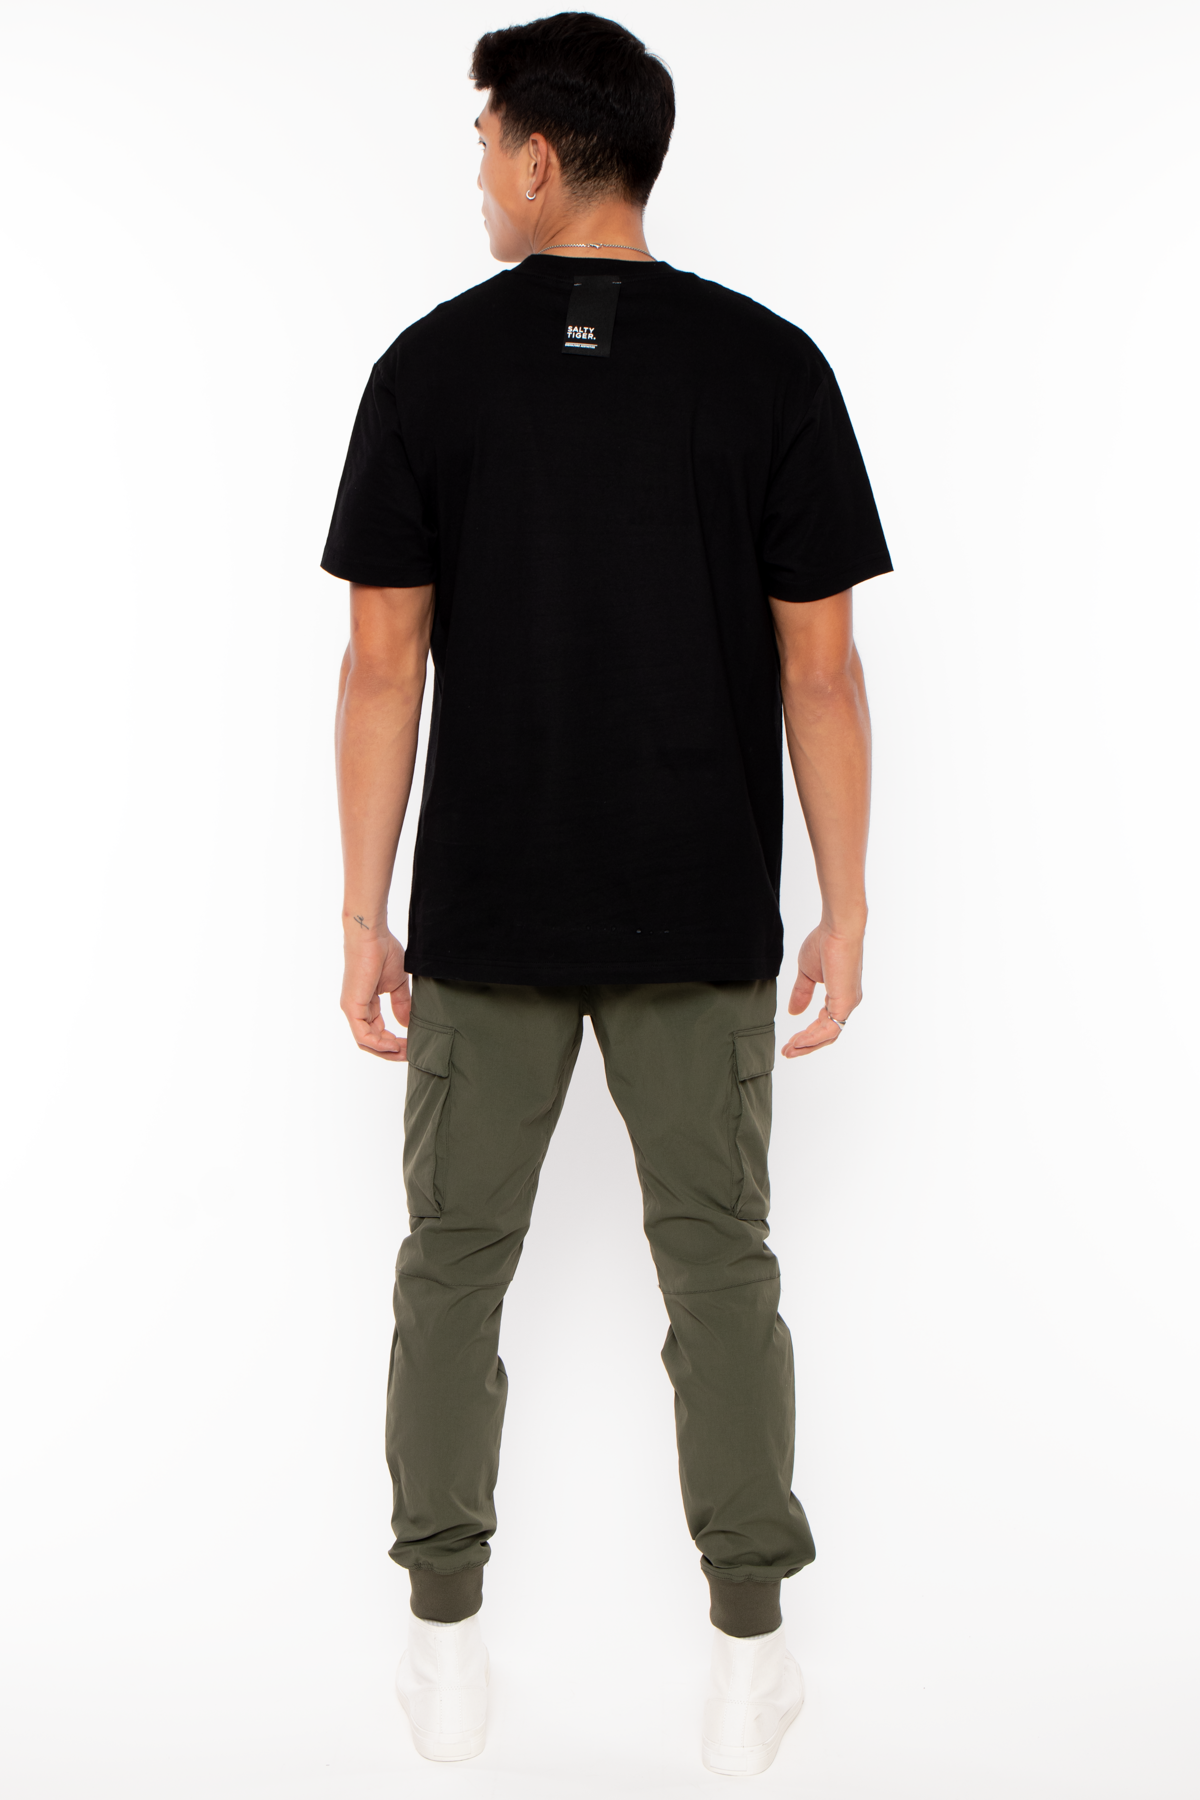 Heavy S/S T-Shirt - STTP0056-001 - Black